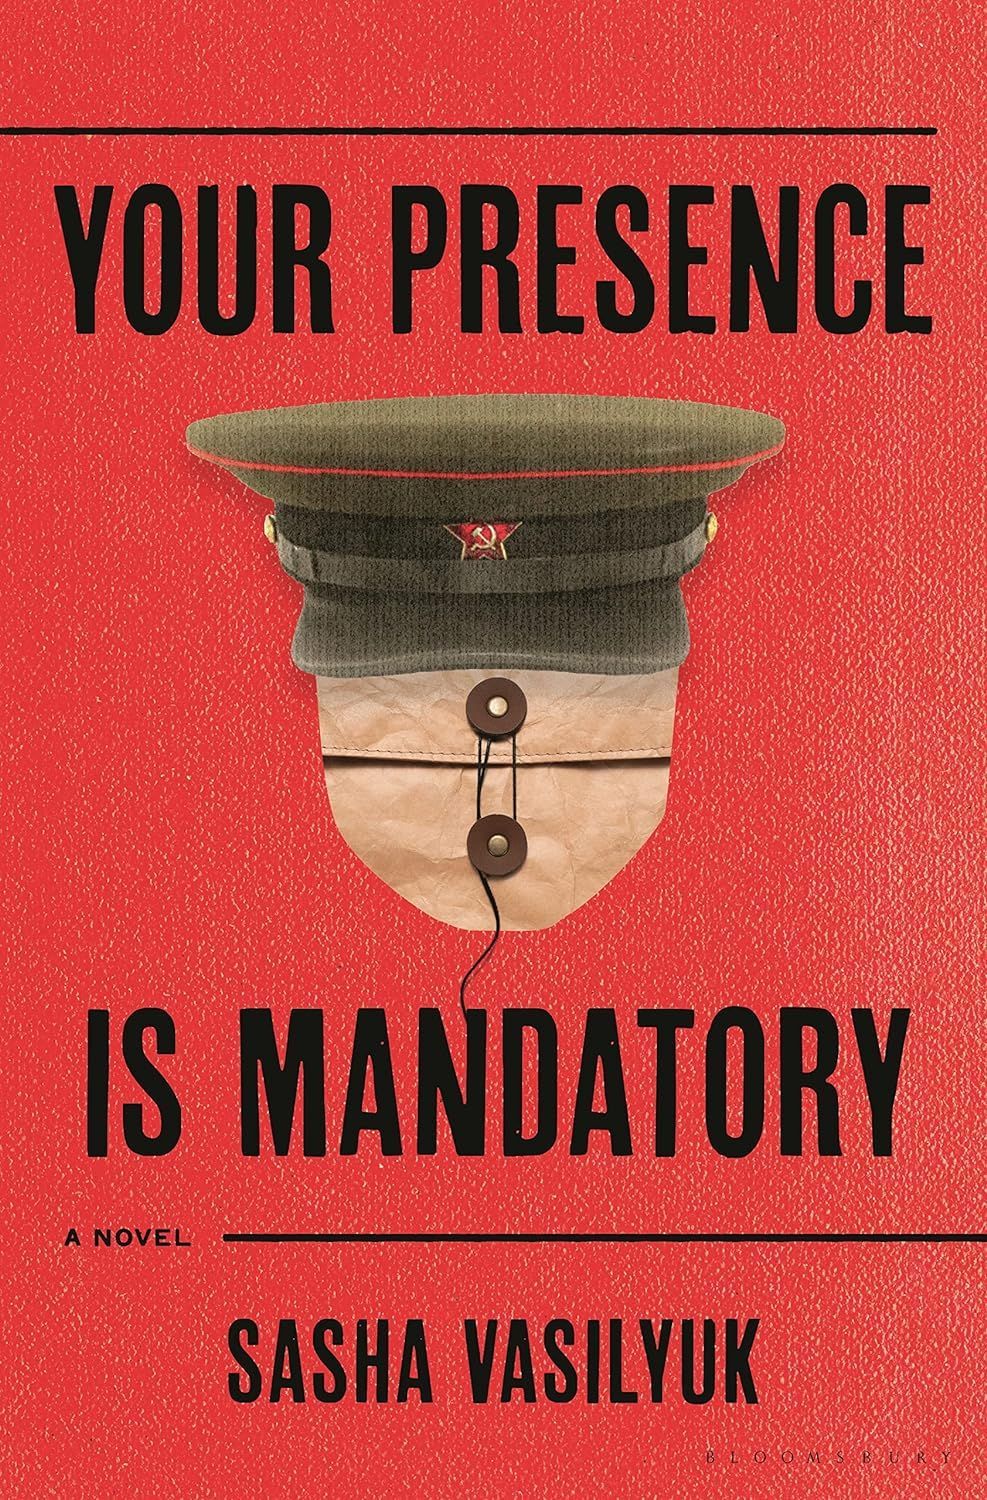 War, Perpetuated: On Sasha Vasilyuk’s “Your Presence Is Mandatory”